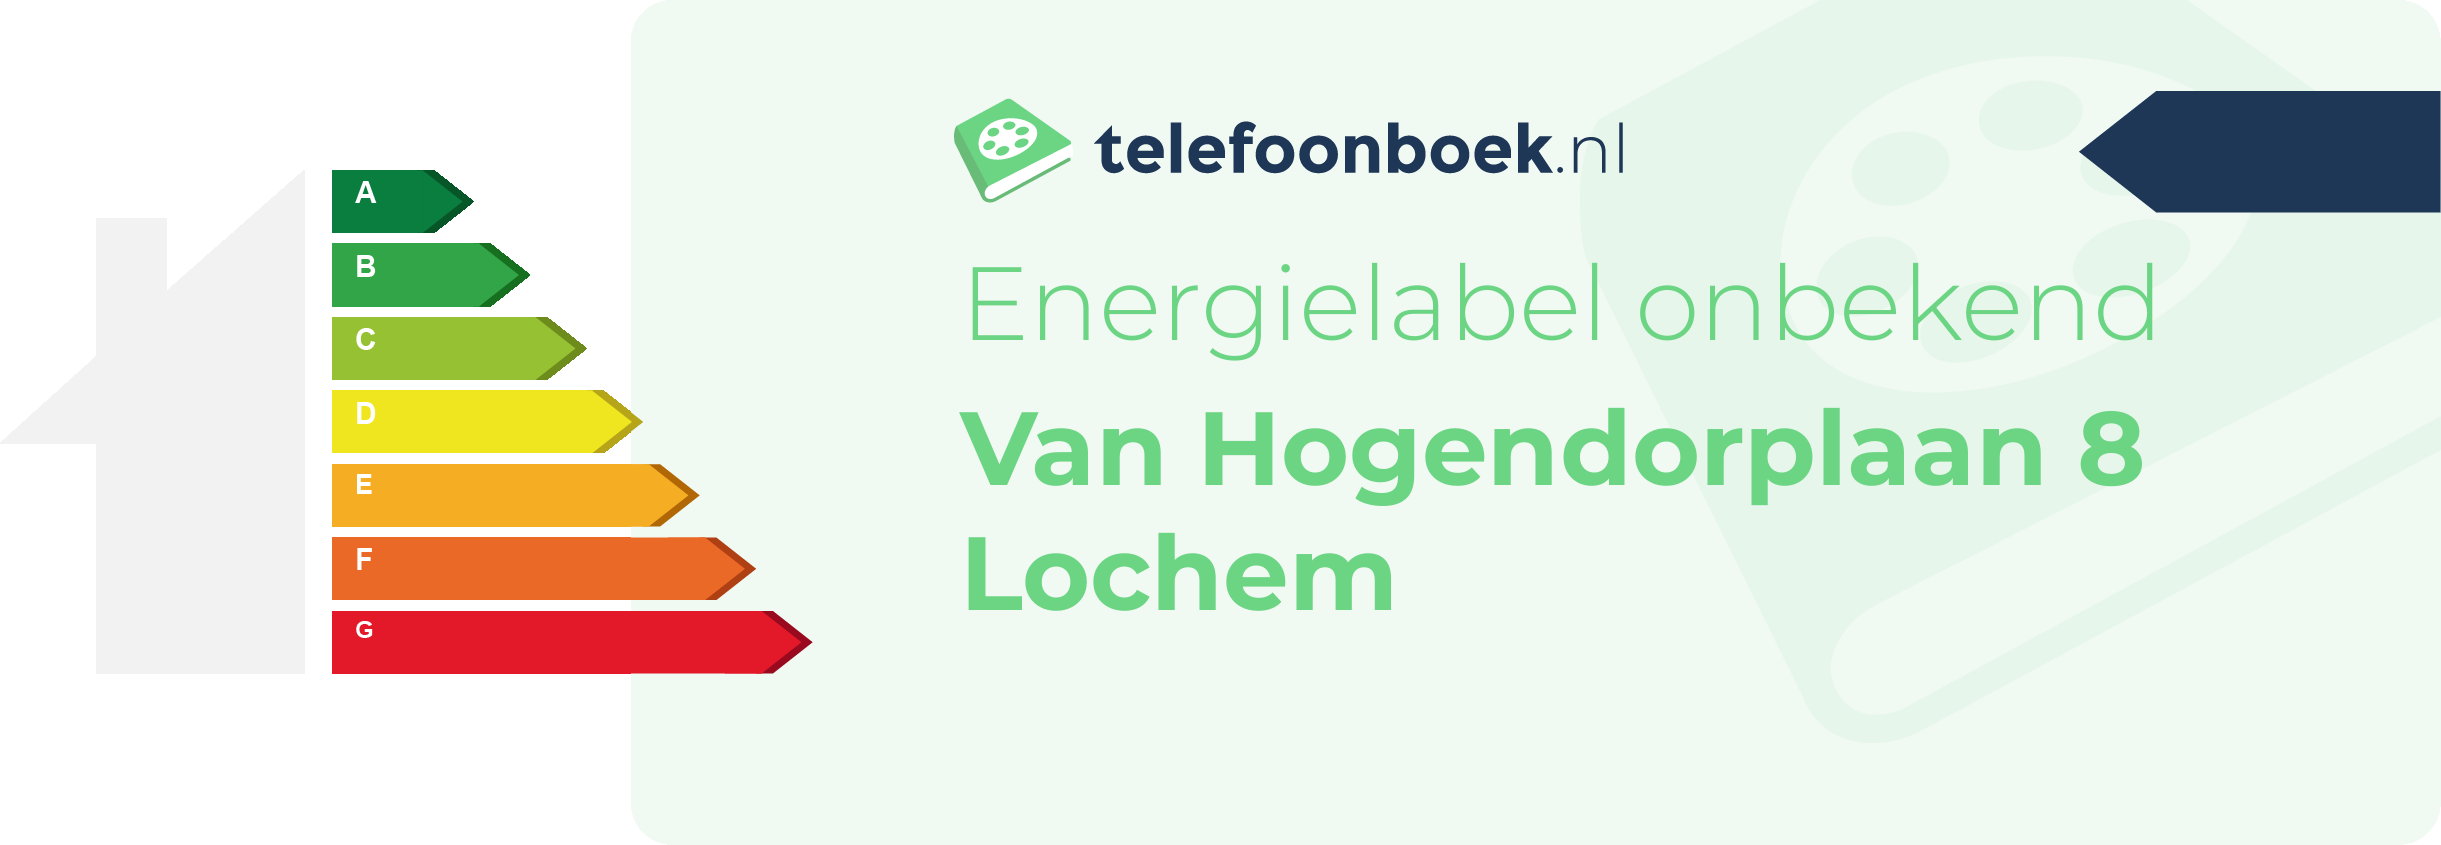 Energielabel Van Hogendorplaan 8 Lochem